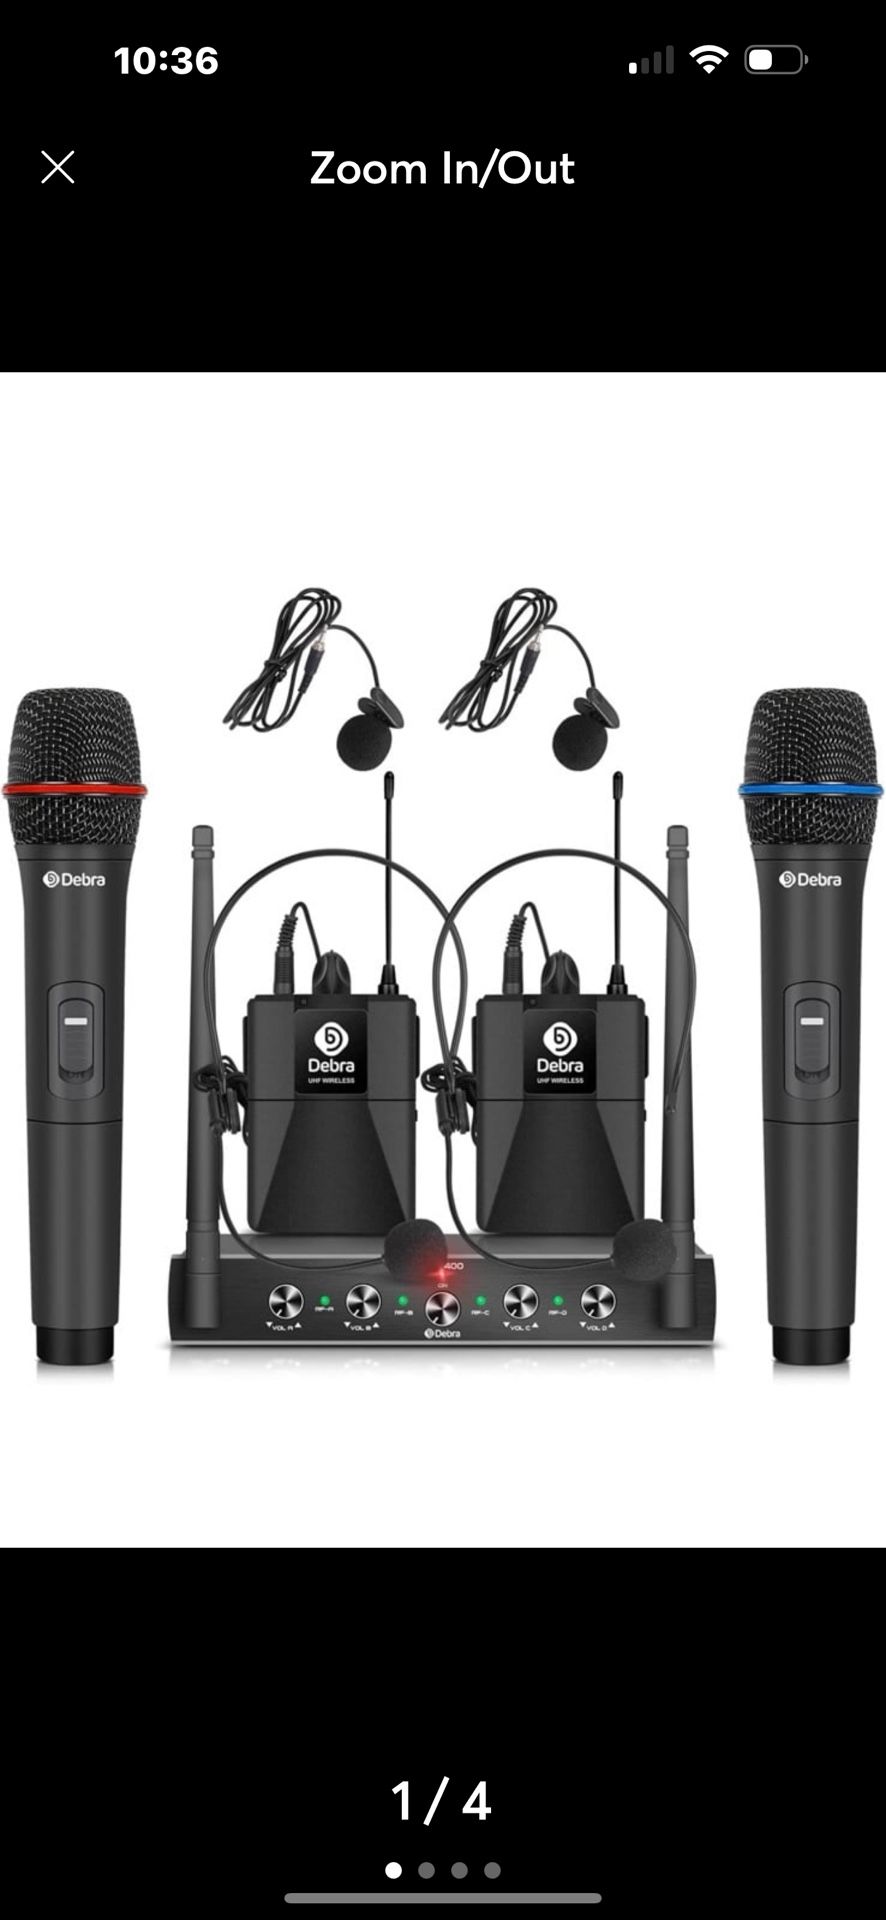 Debra Audio Pro UHF 4 Channel Wireless Microphone System